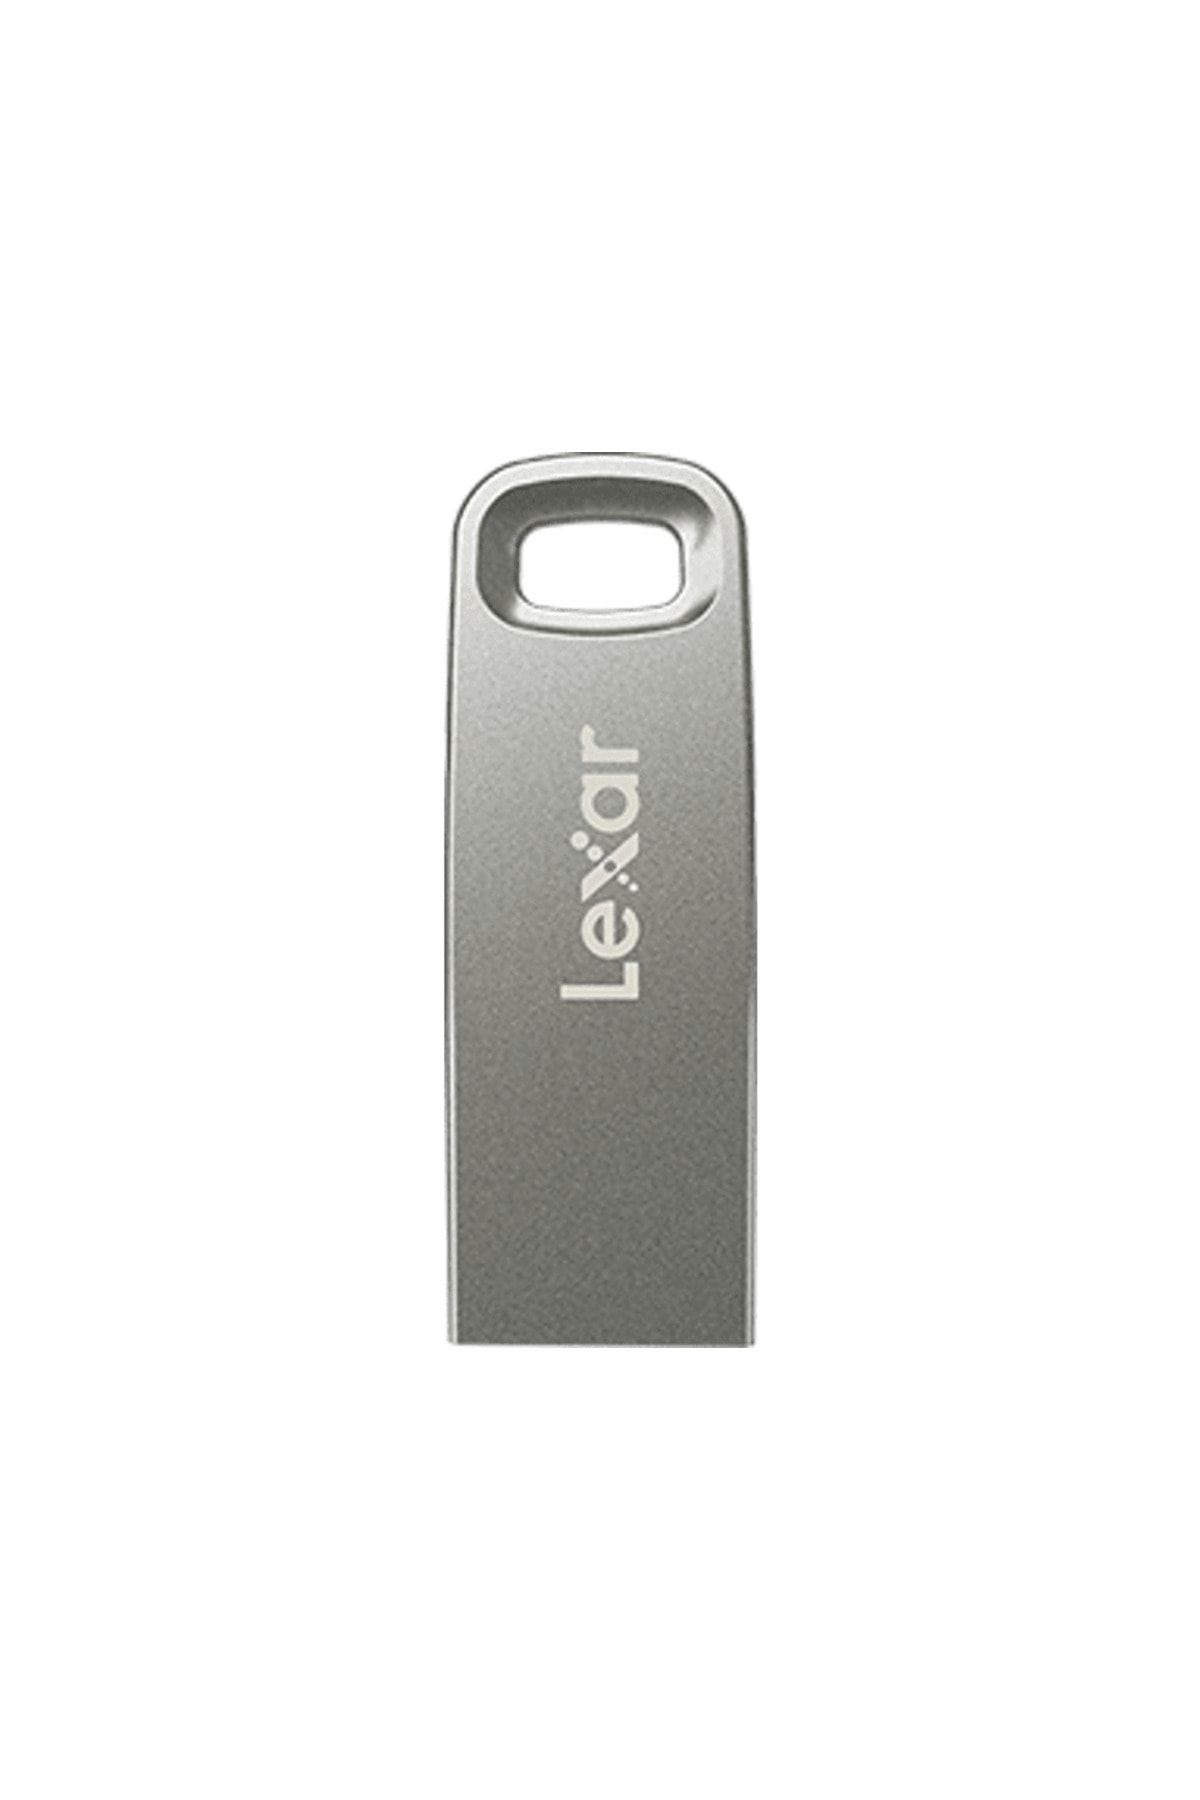 Lexar JumpDrive USB 3.1 M45 256GB Housing, up to 250MB/s USB Bellek Gümüş